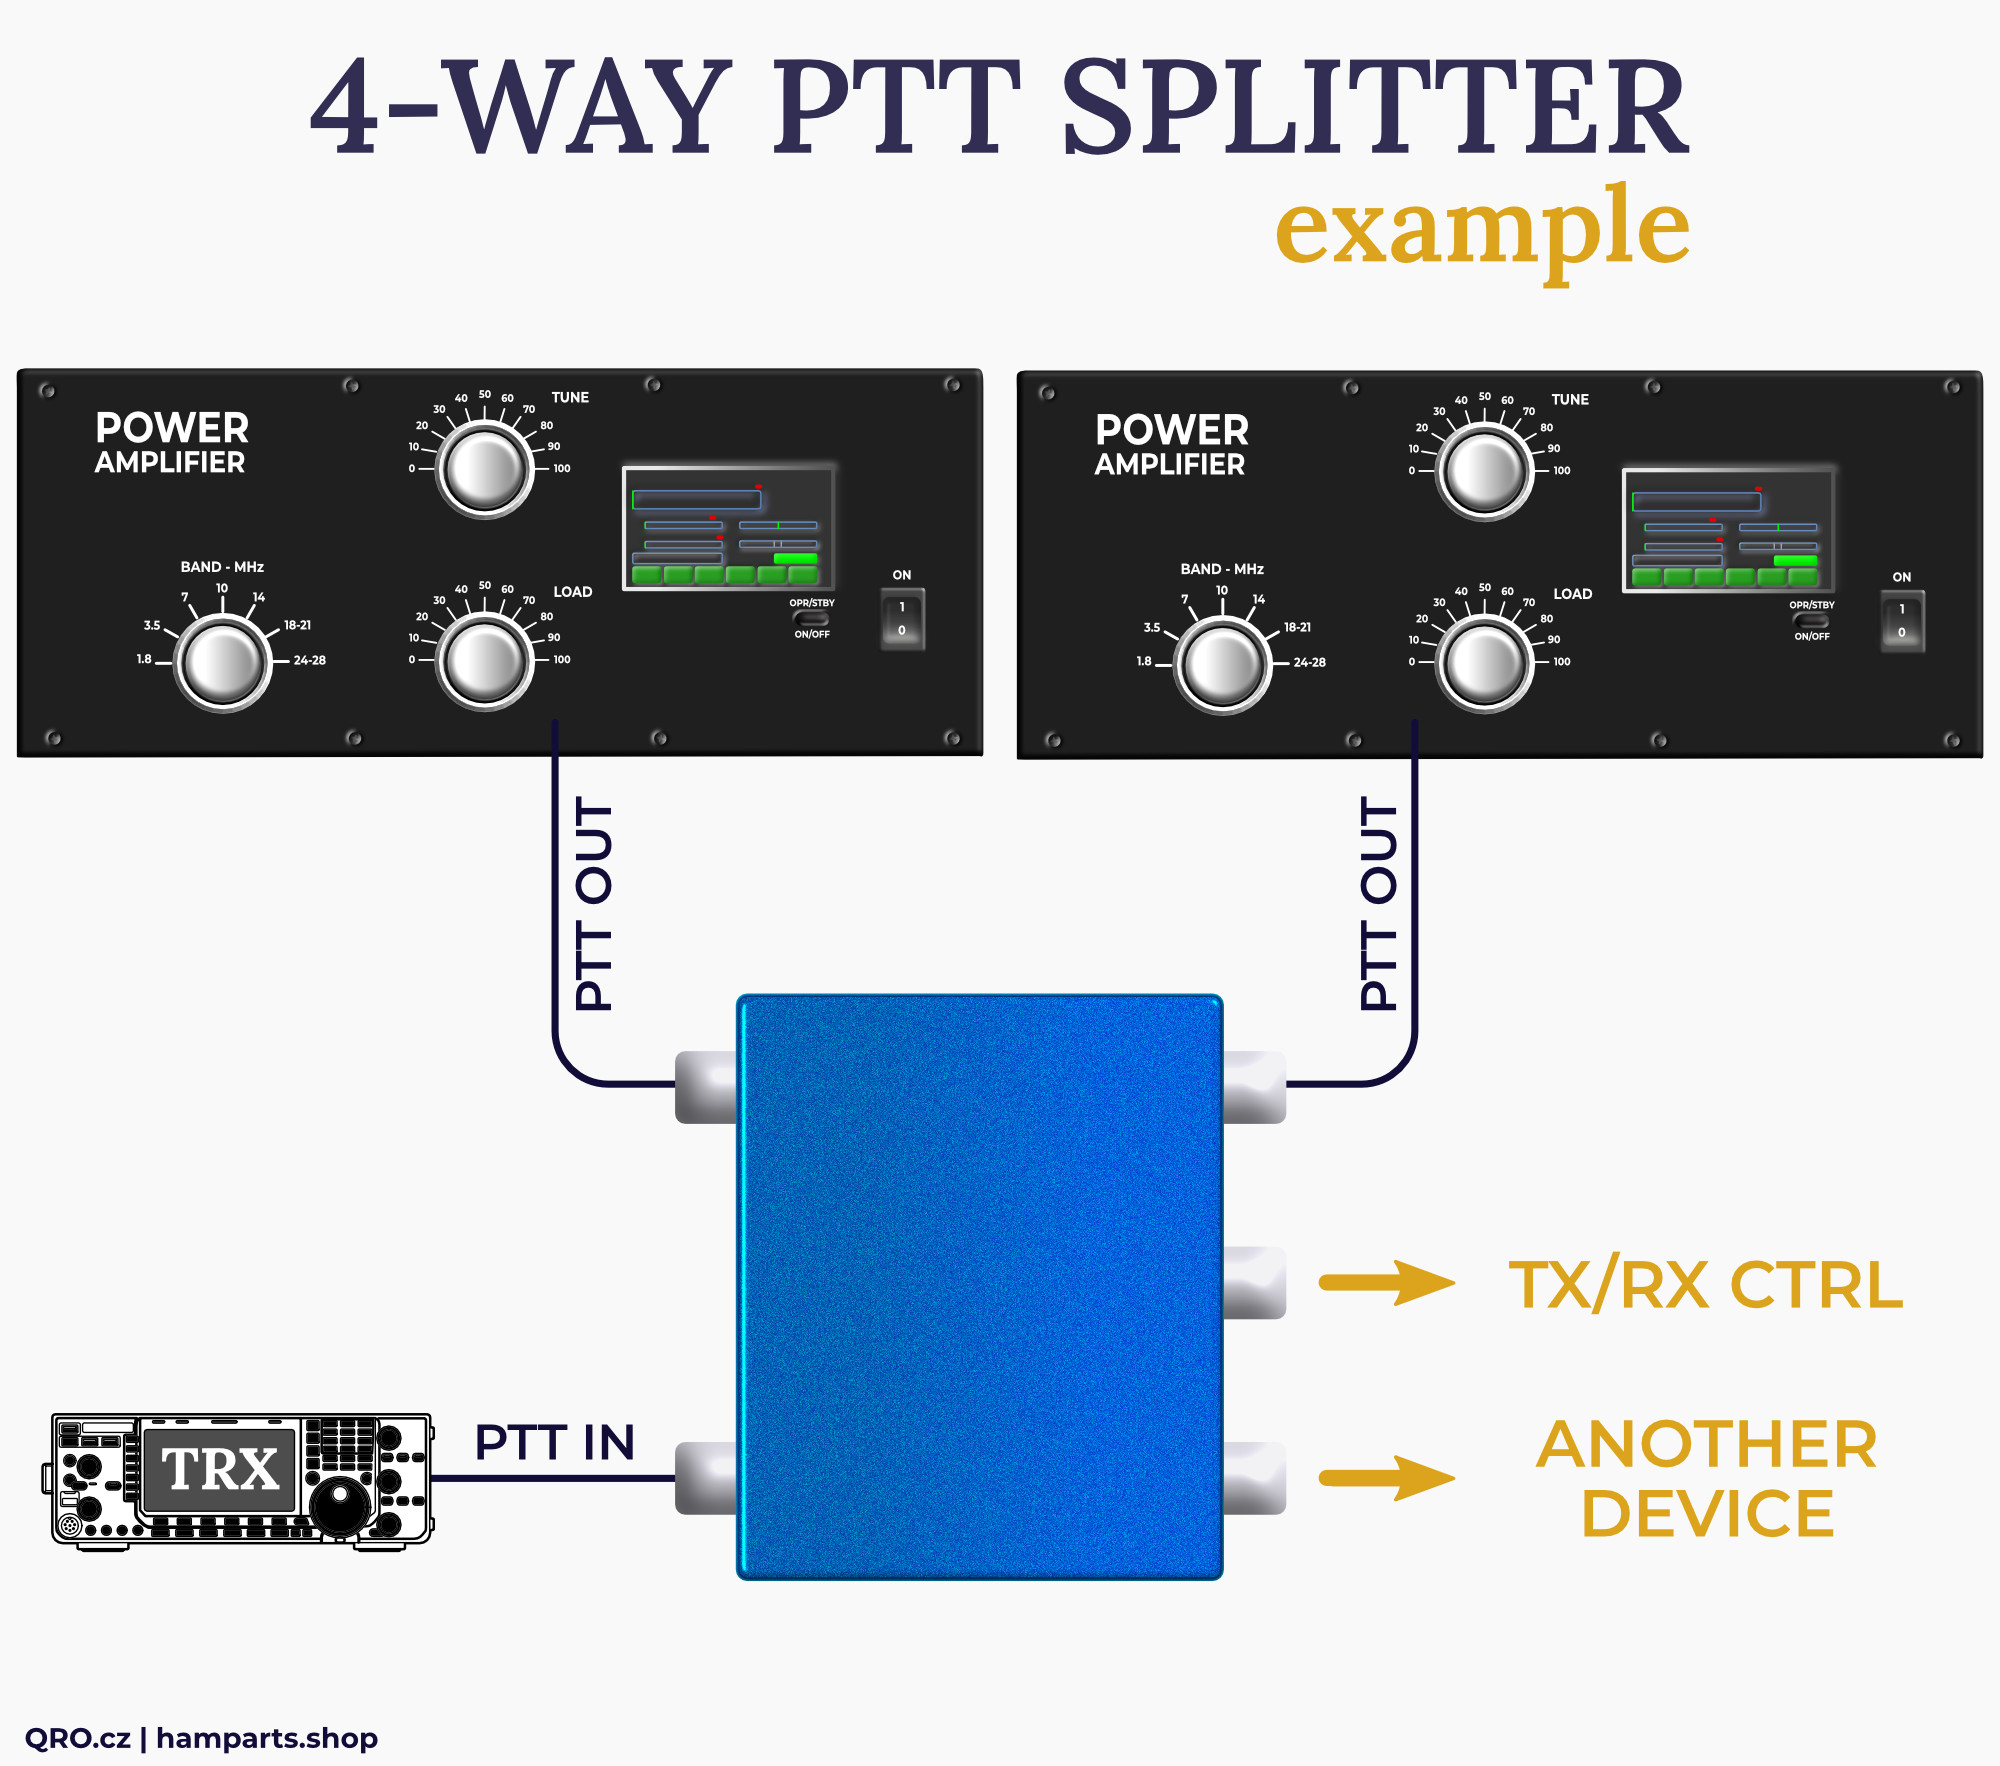 4-way ptt splitter with power amplifier by qro.cz hamparts.shop